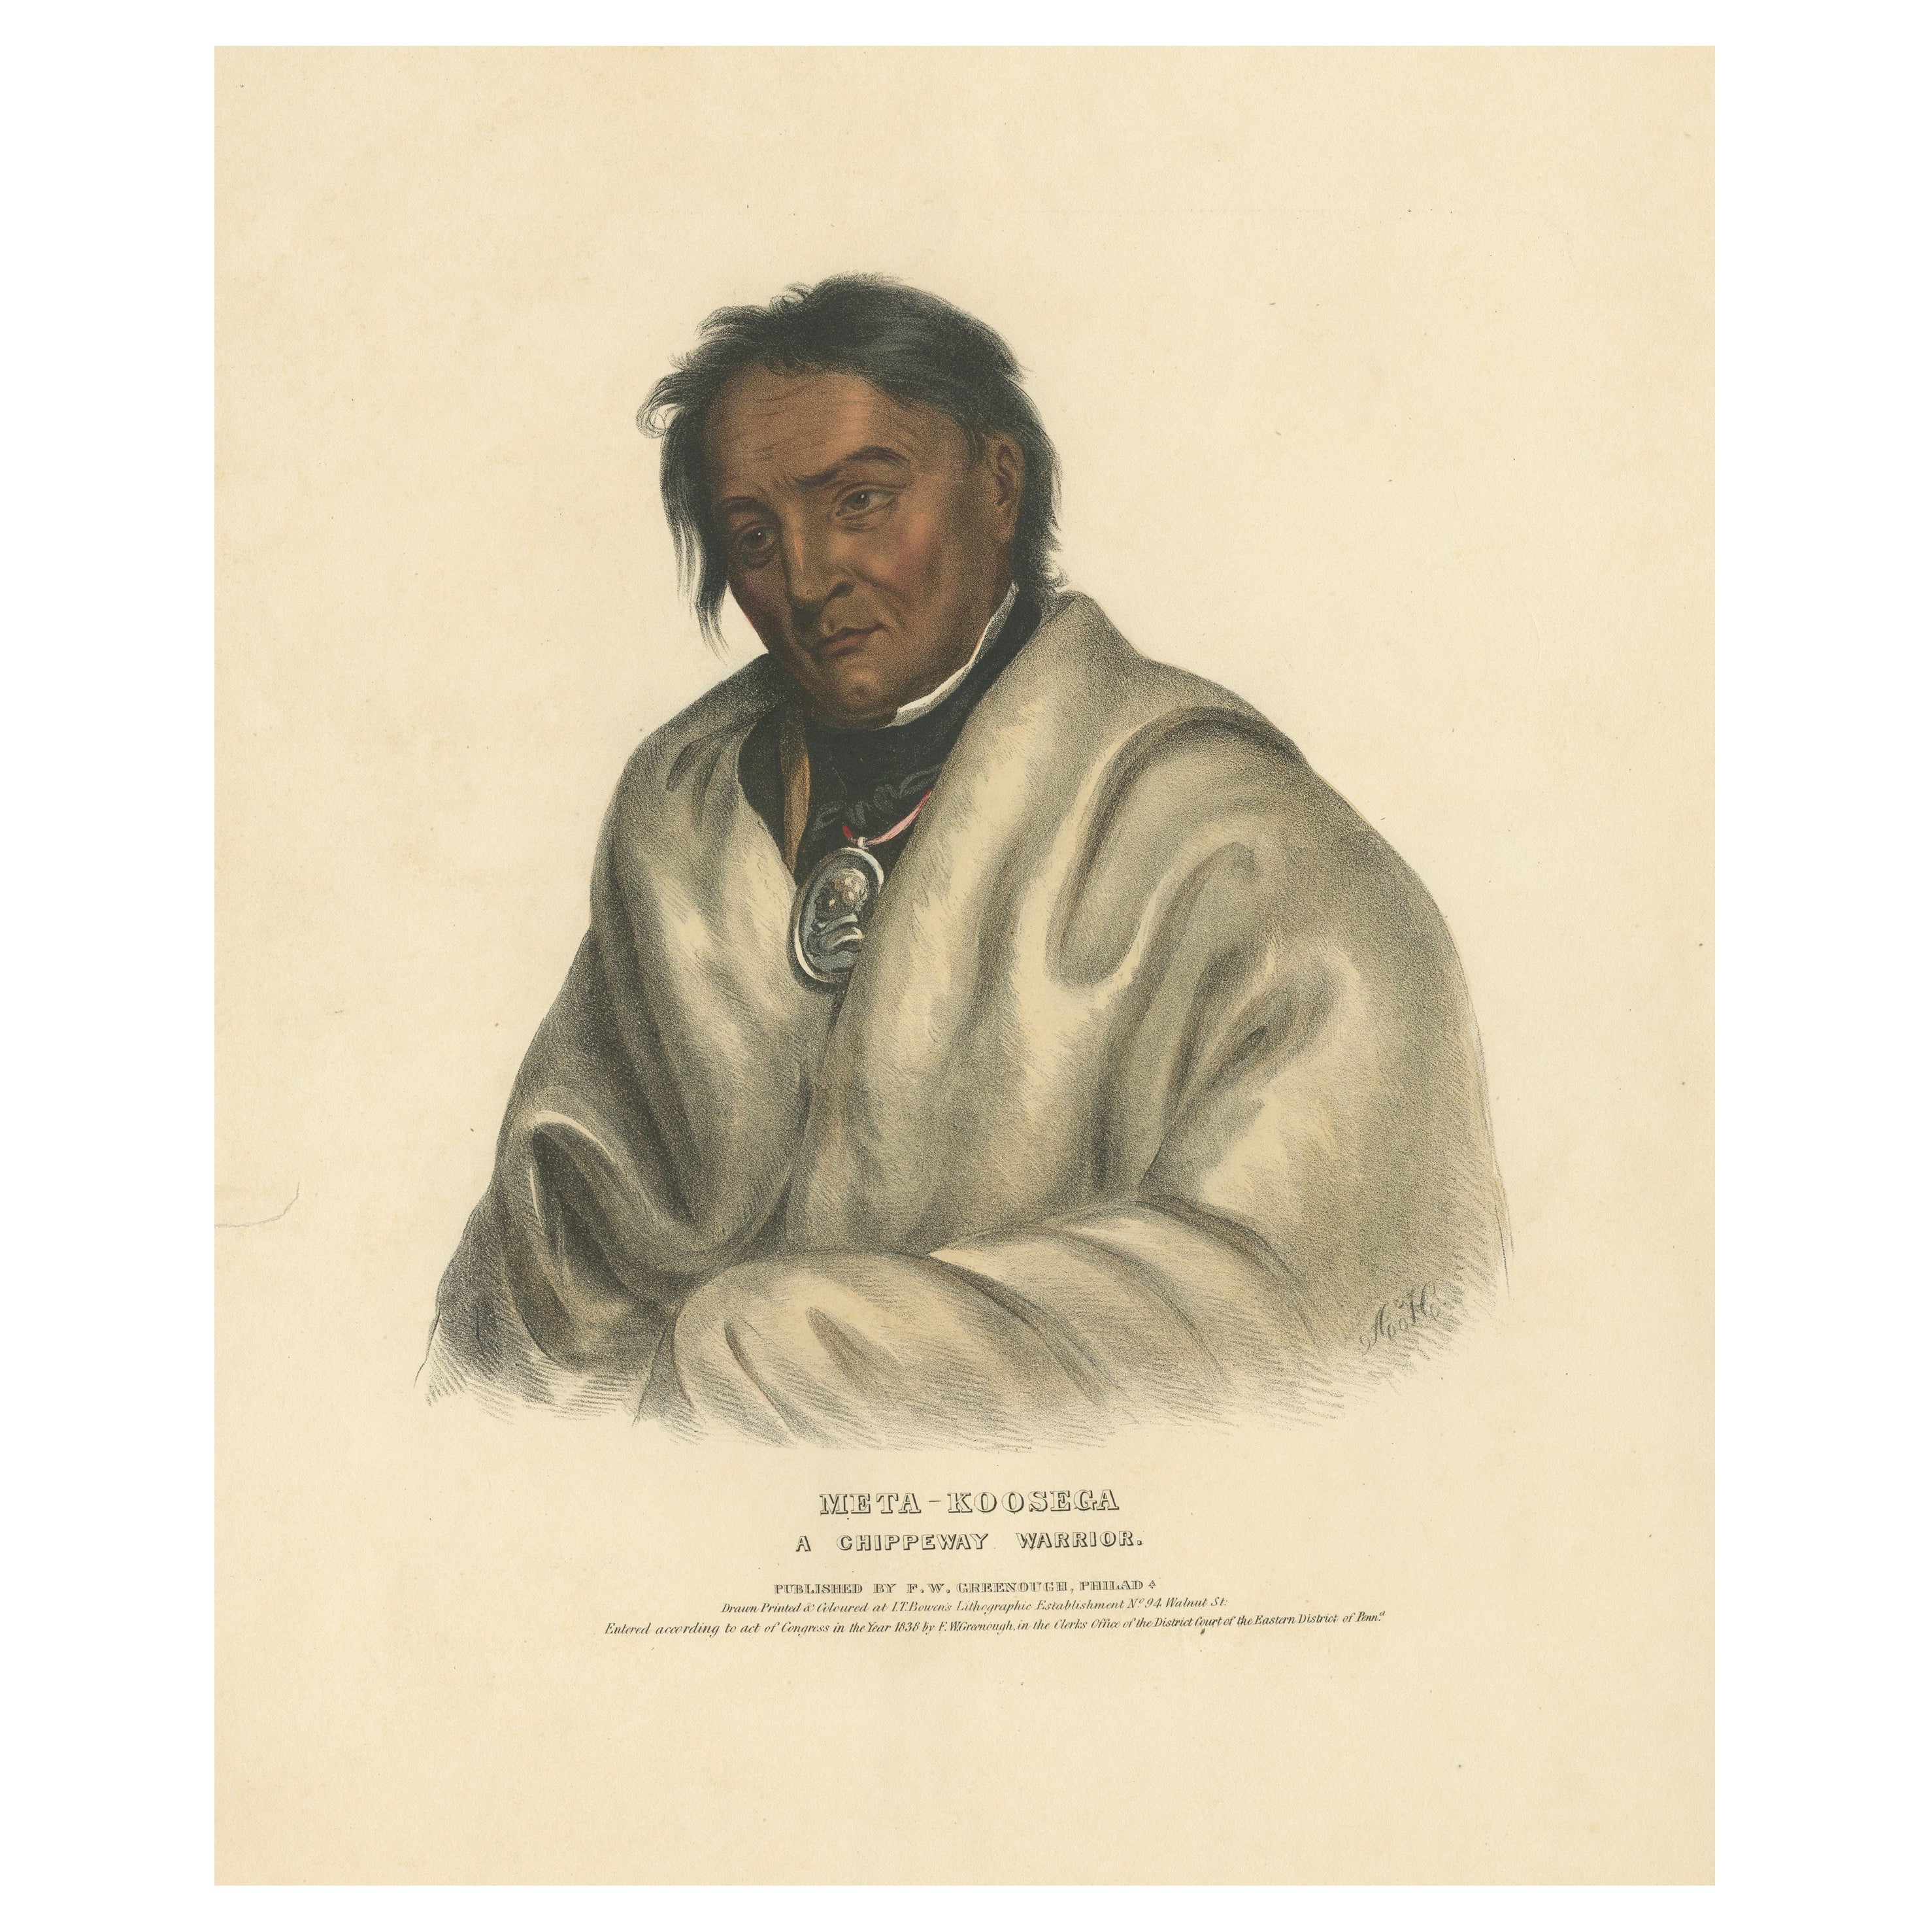 Large Antique Print of Meta-Koosega, an Ojibwe Warrior, circa 1838 For Sale